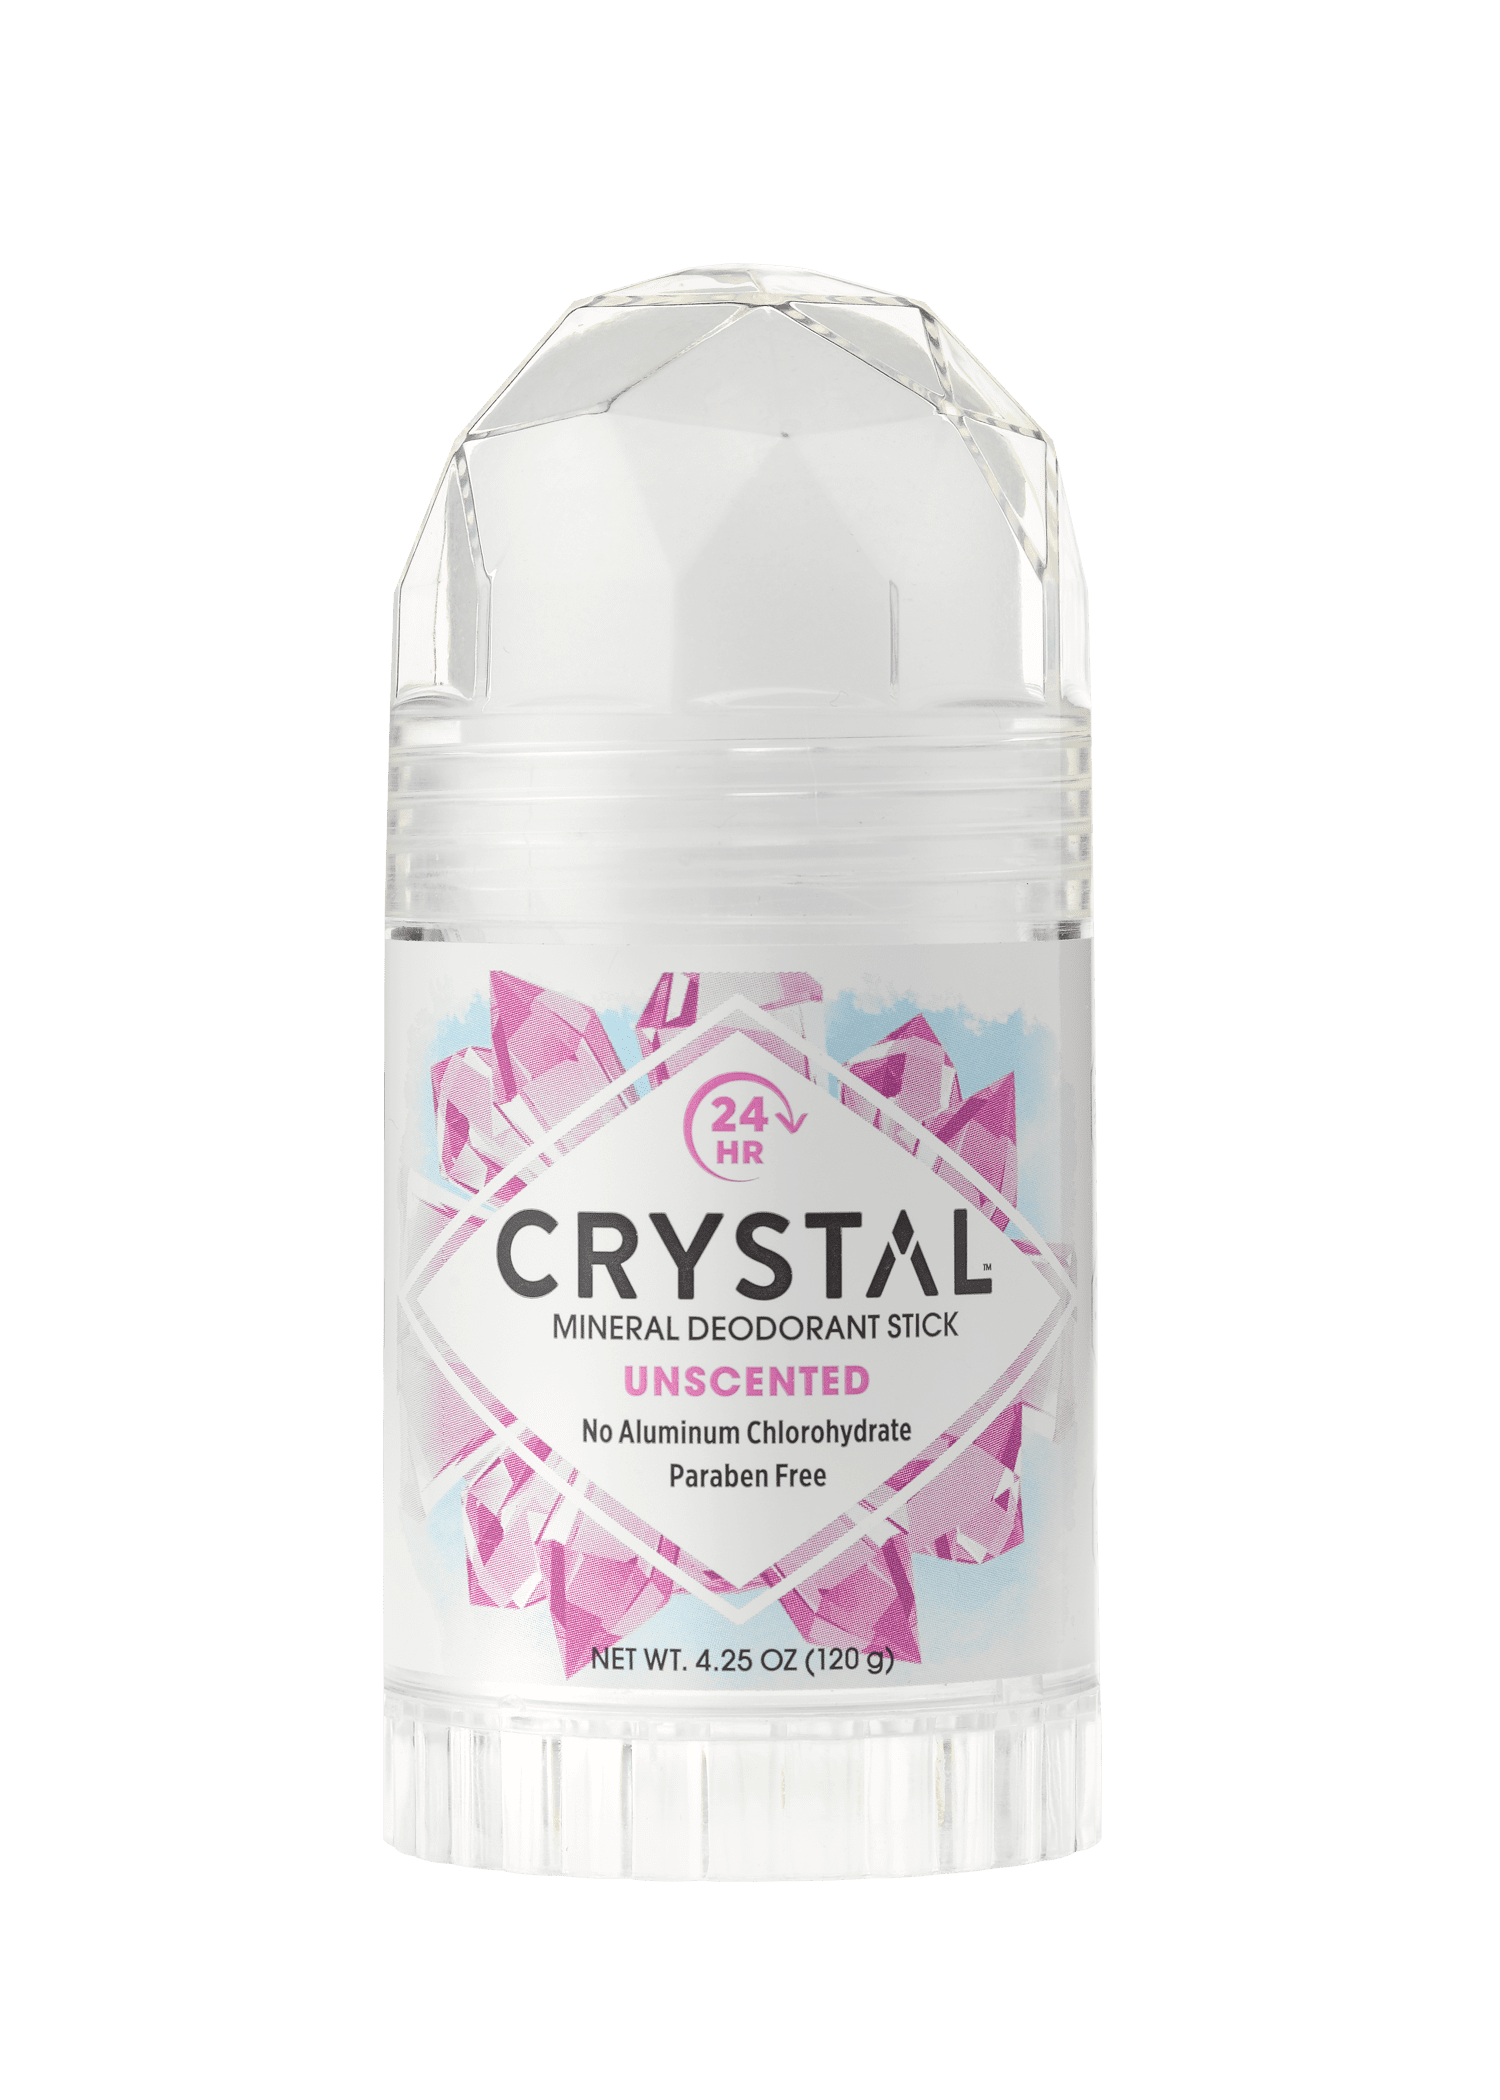 Дезодорант crystal. Дезодорант Crystal body Deodorant. Crystal body Deodorant Stick 120g. Дезодорант Crystal Unscented. Дезодорант карандаш body Crystal 120.